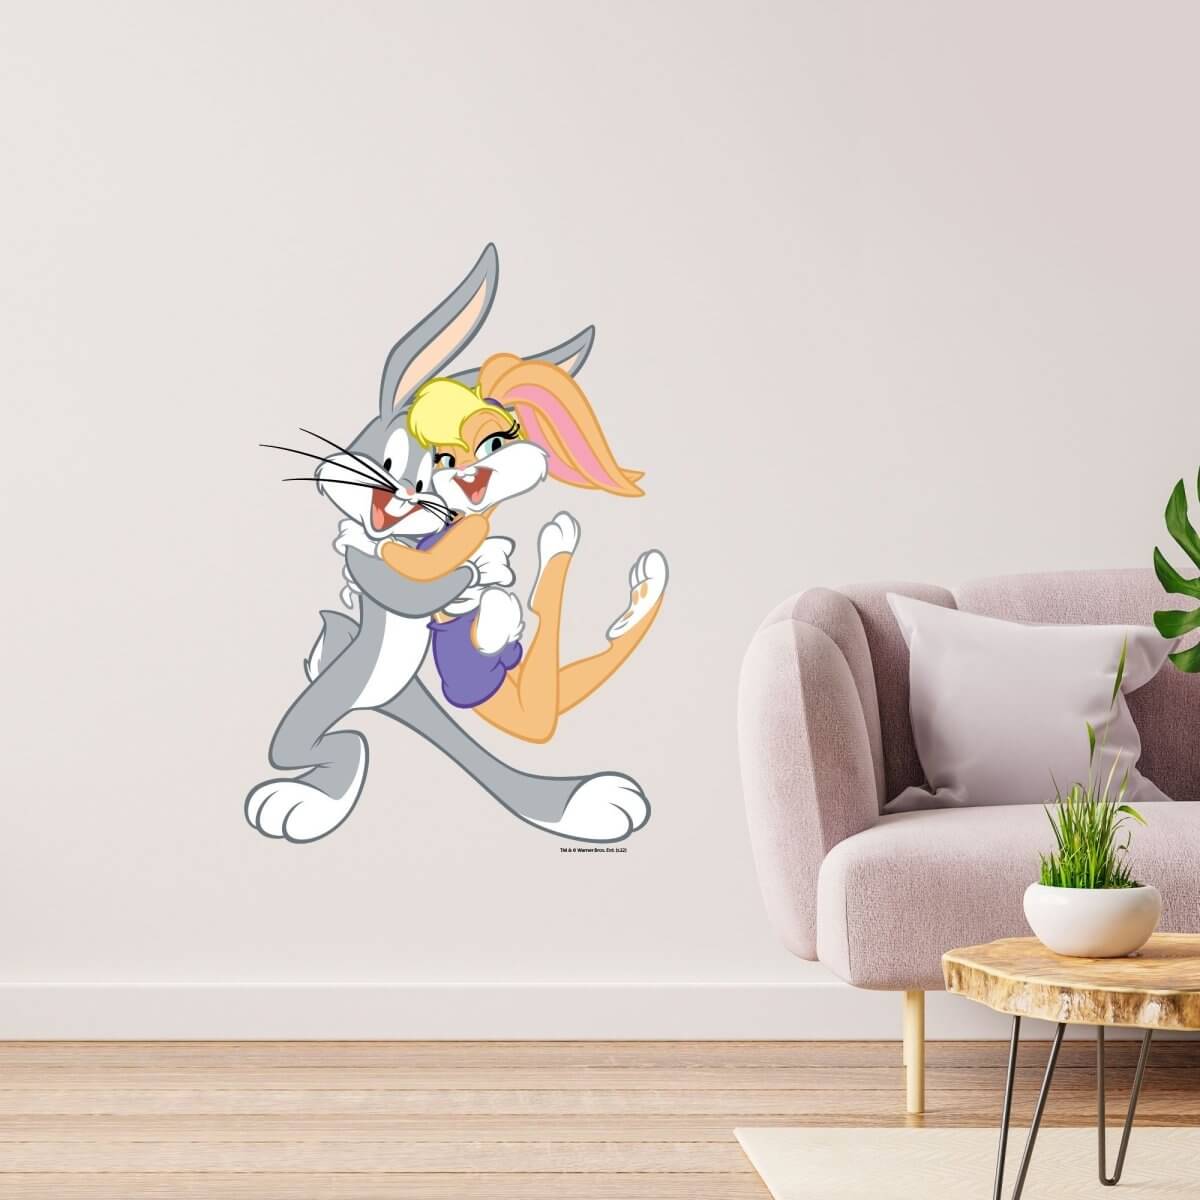 Kismet Decals Looney Tunes Bugs & Lola Licensed Wall Sticker - Easy DIY Home & Kids Room Decor Wall Decal Art - Kismet Decals